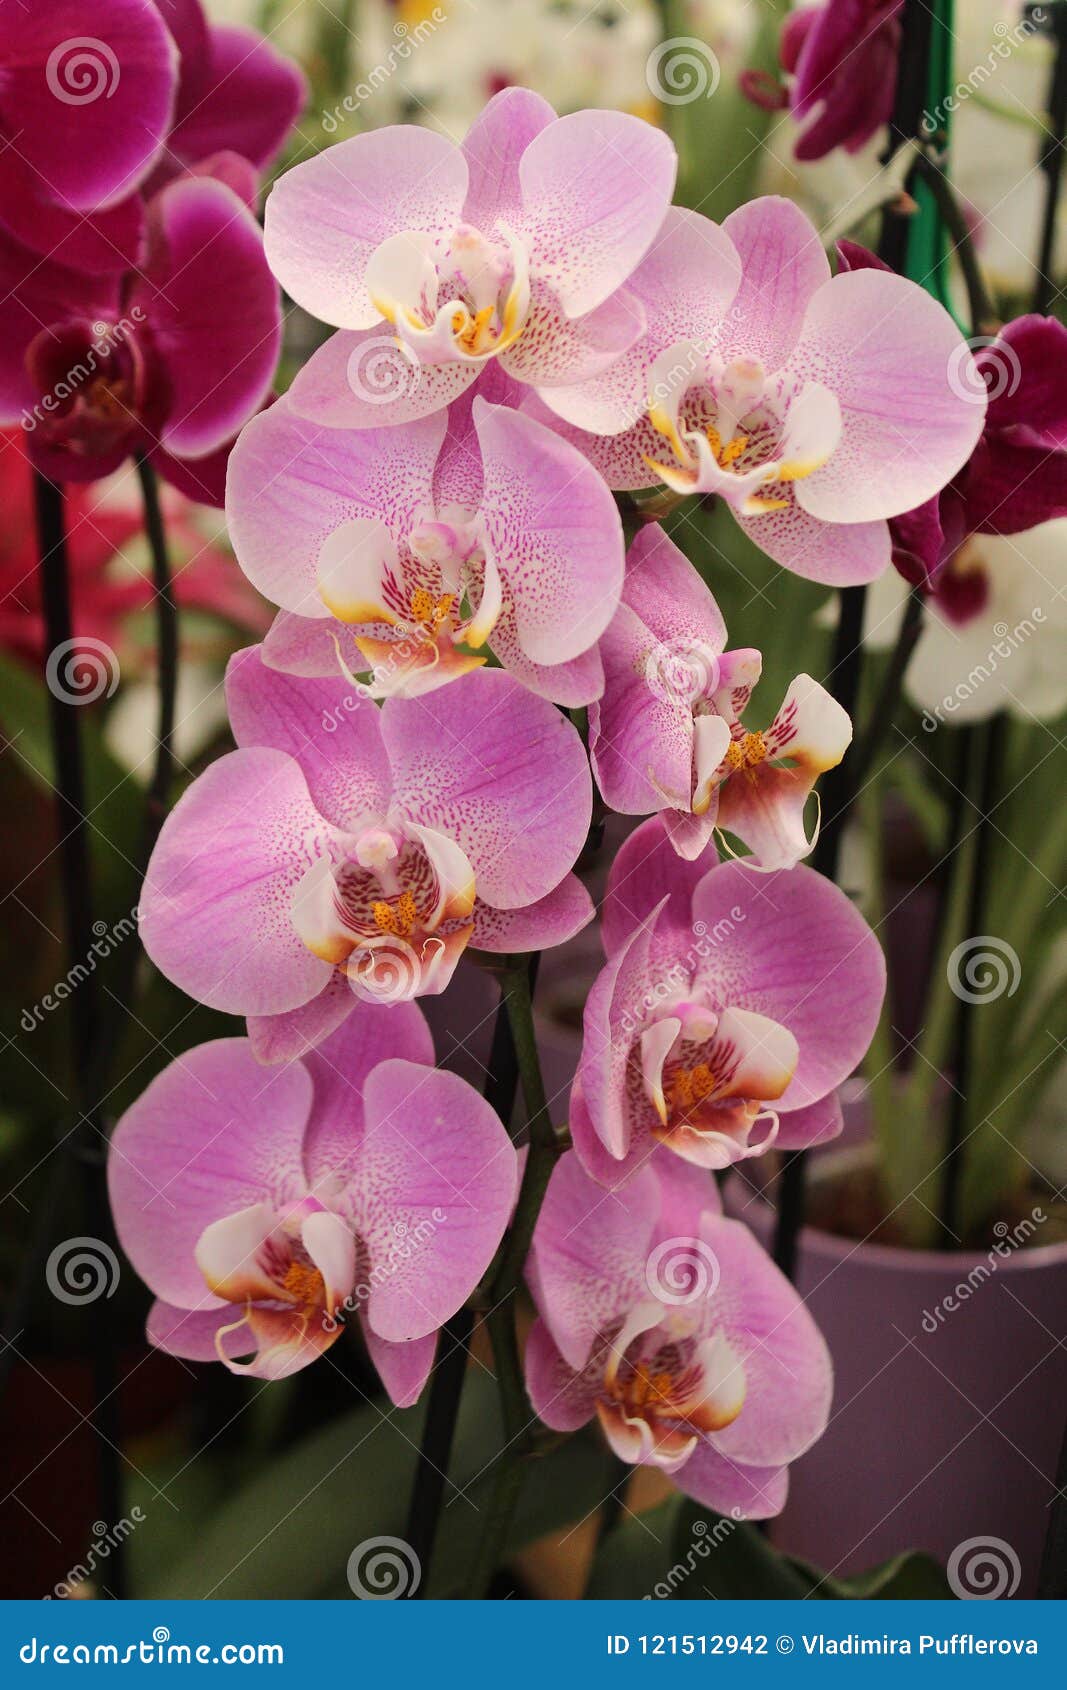 pink flowers of phalaenopsis orchid